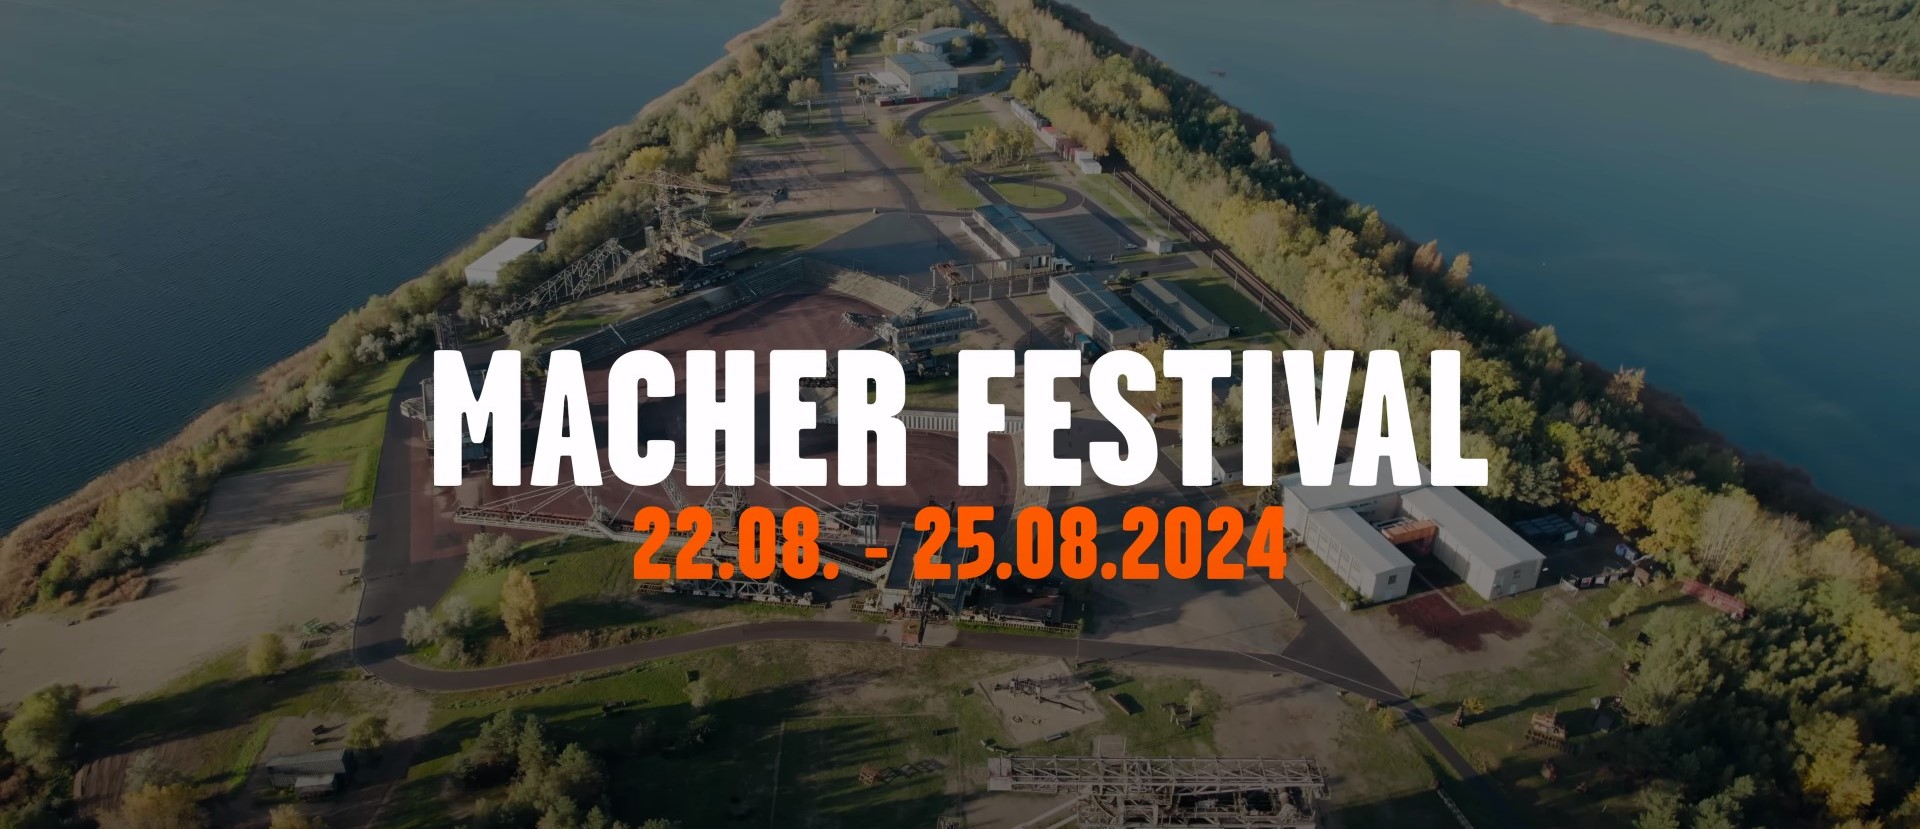 Macher Festival 